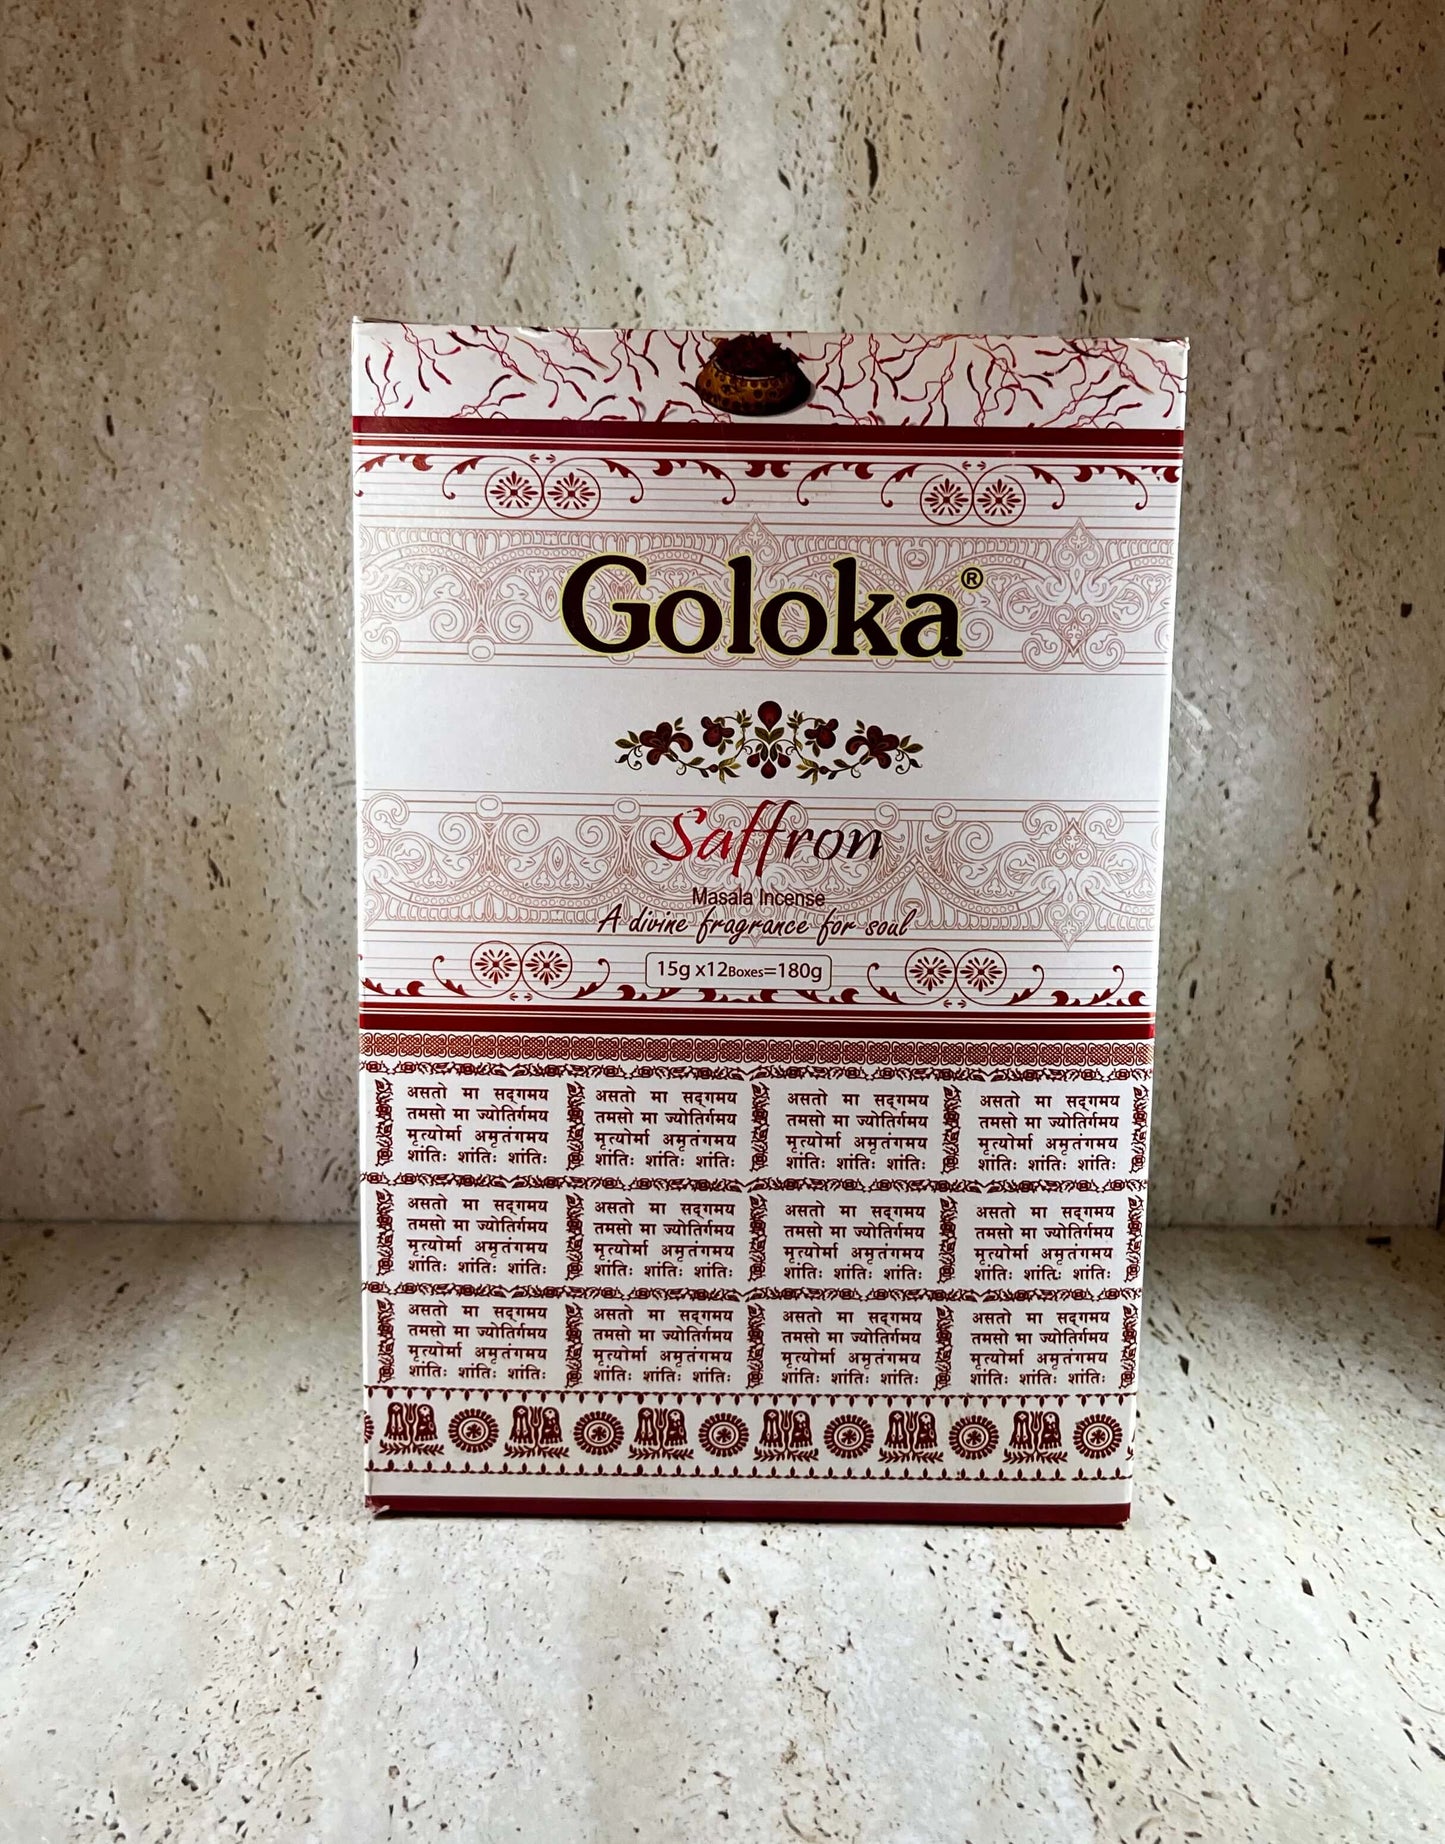 Goloka Saffron incense